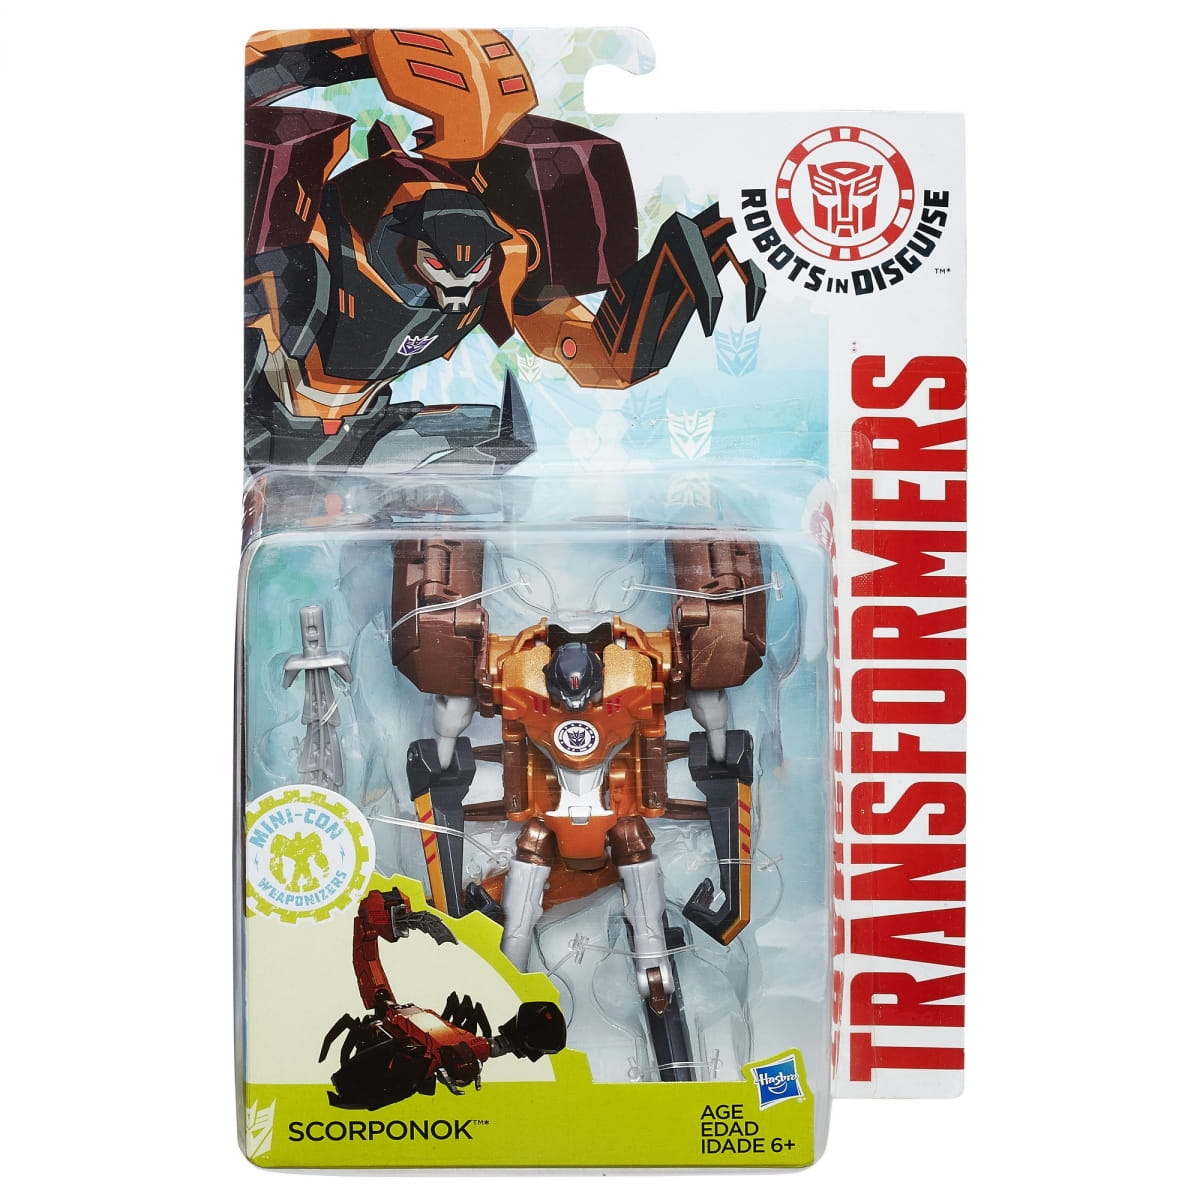   Transformers  - Scorponok (Hasbro)